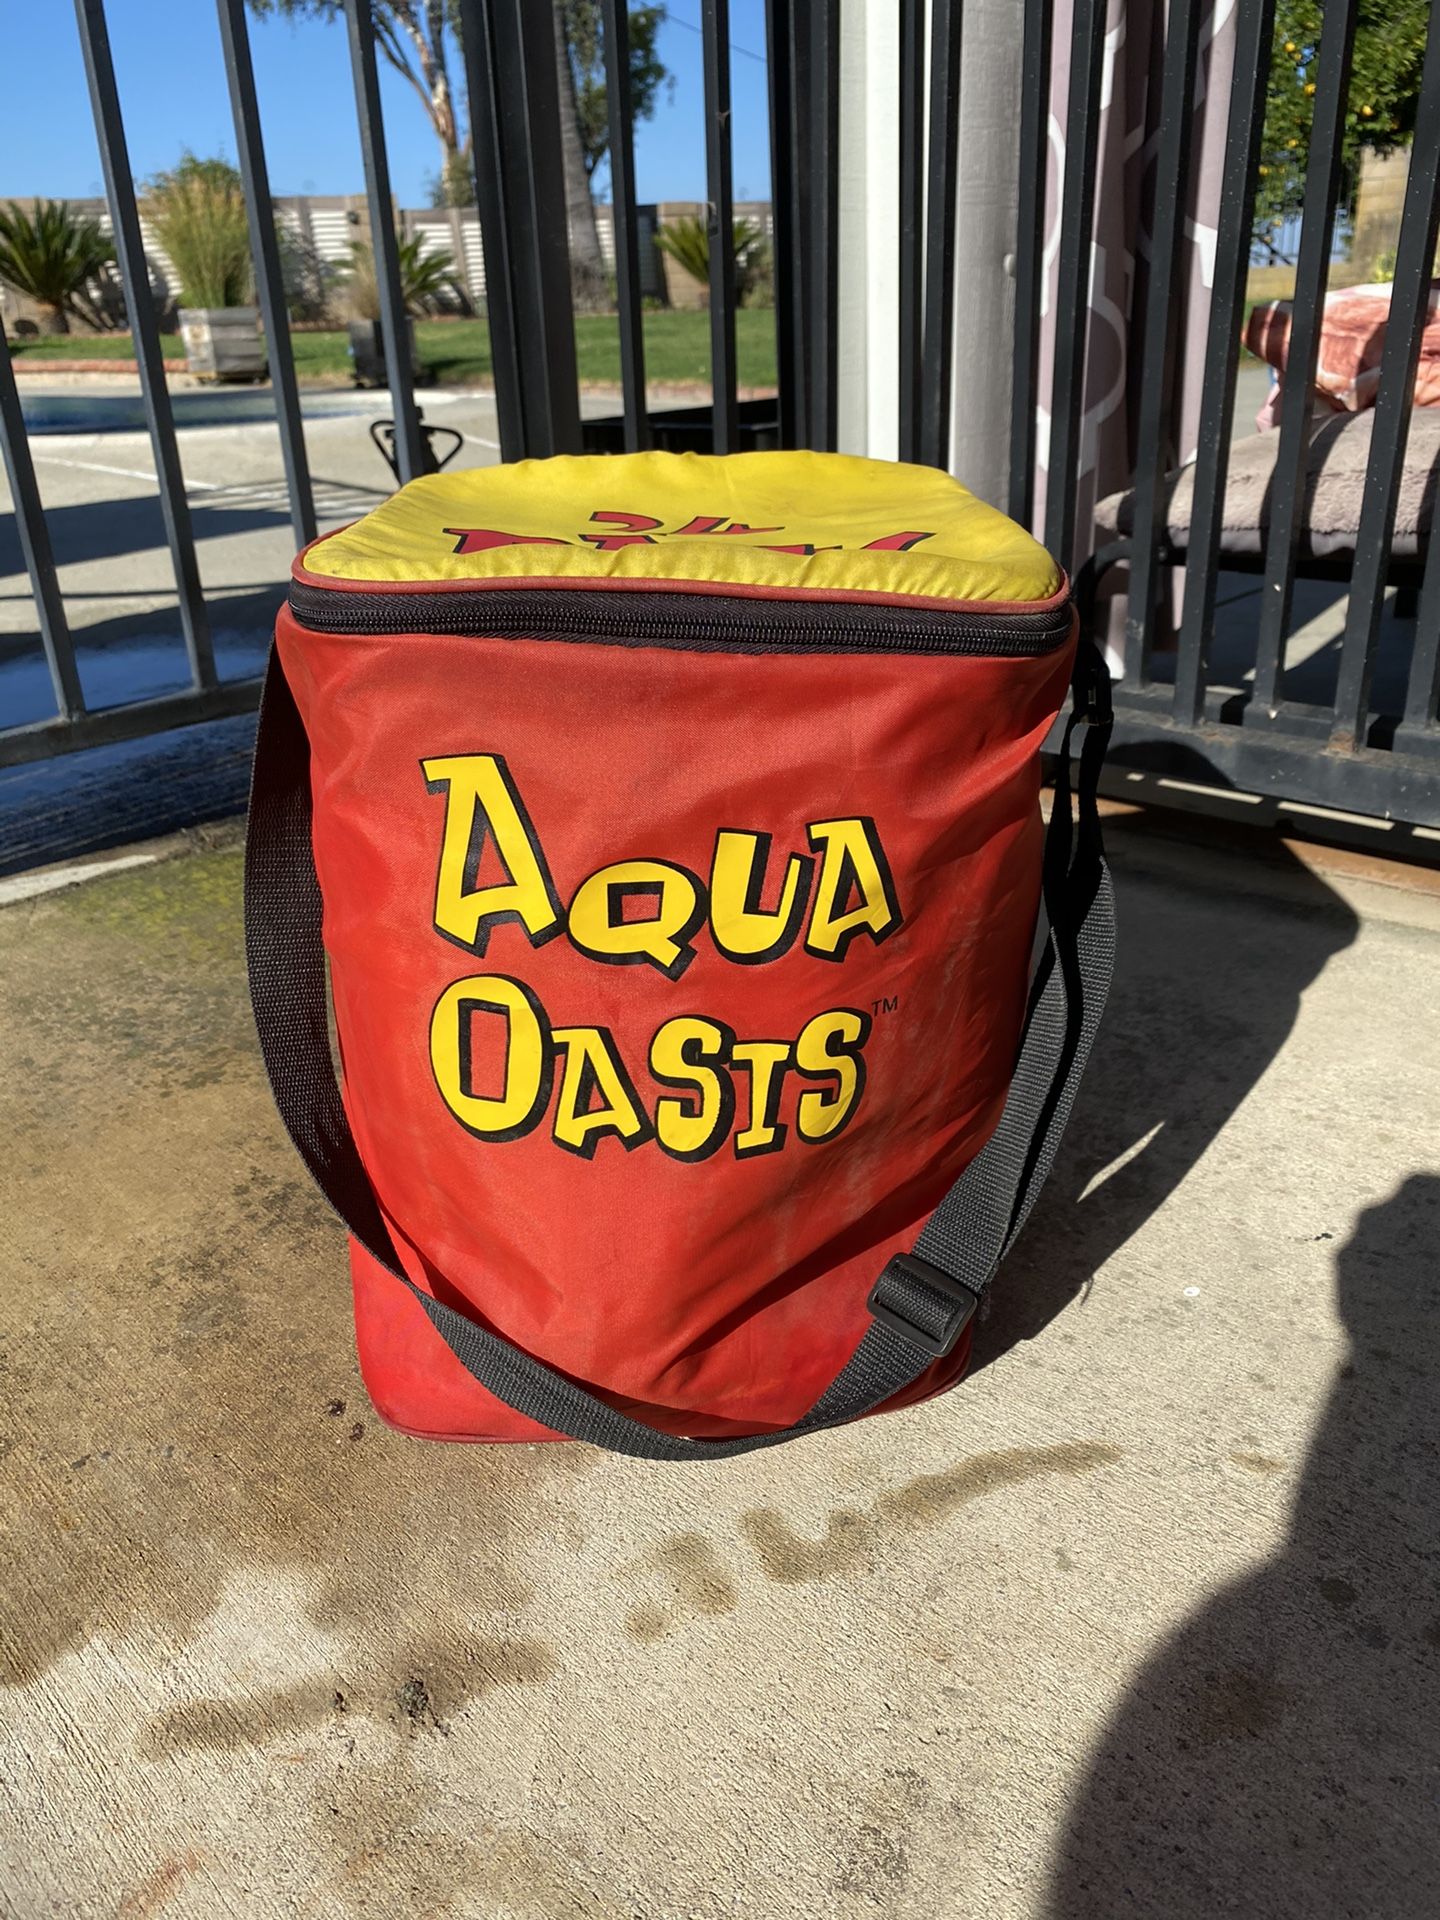 Aqua Oasis Cooler and Beer Raft